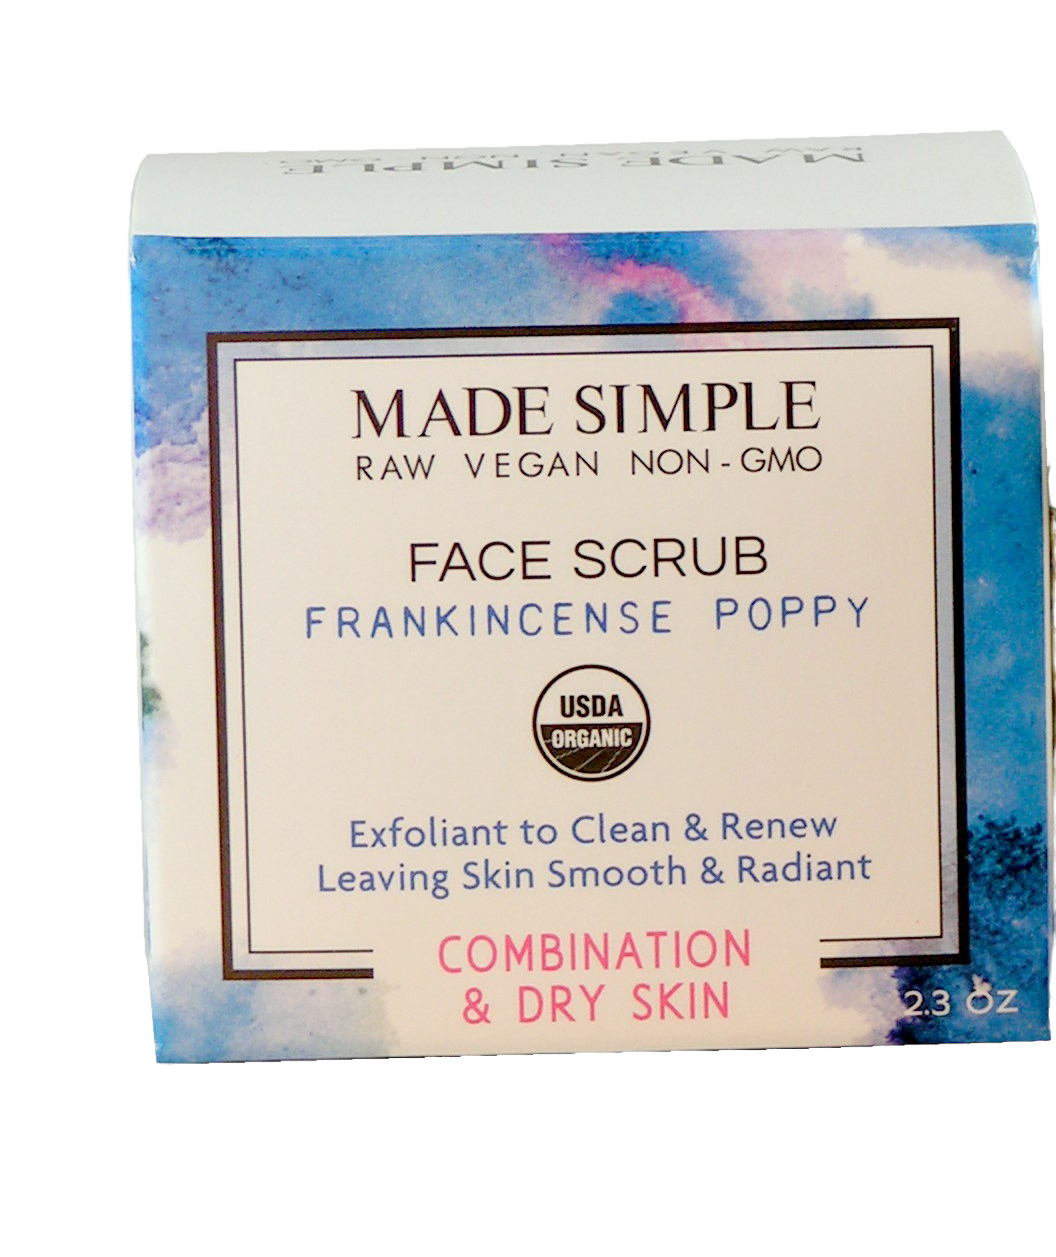 Made Simple Skin Care Frankincense Poppy face scrub USDA Certified Organic Raw Vegan NonGMO